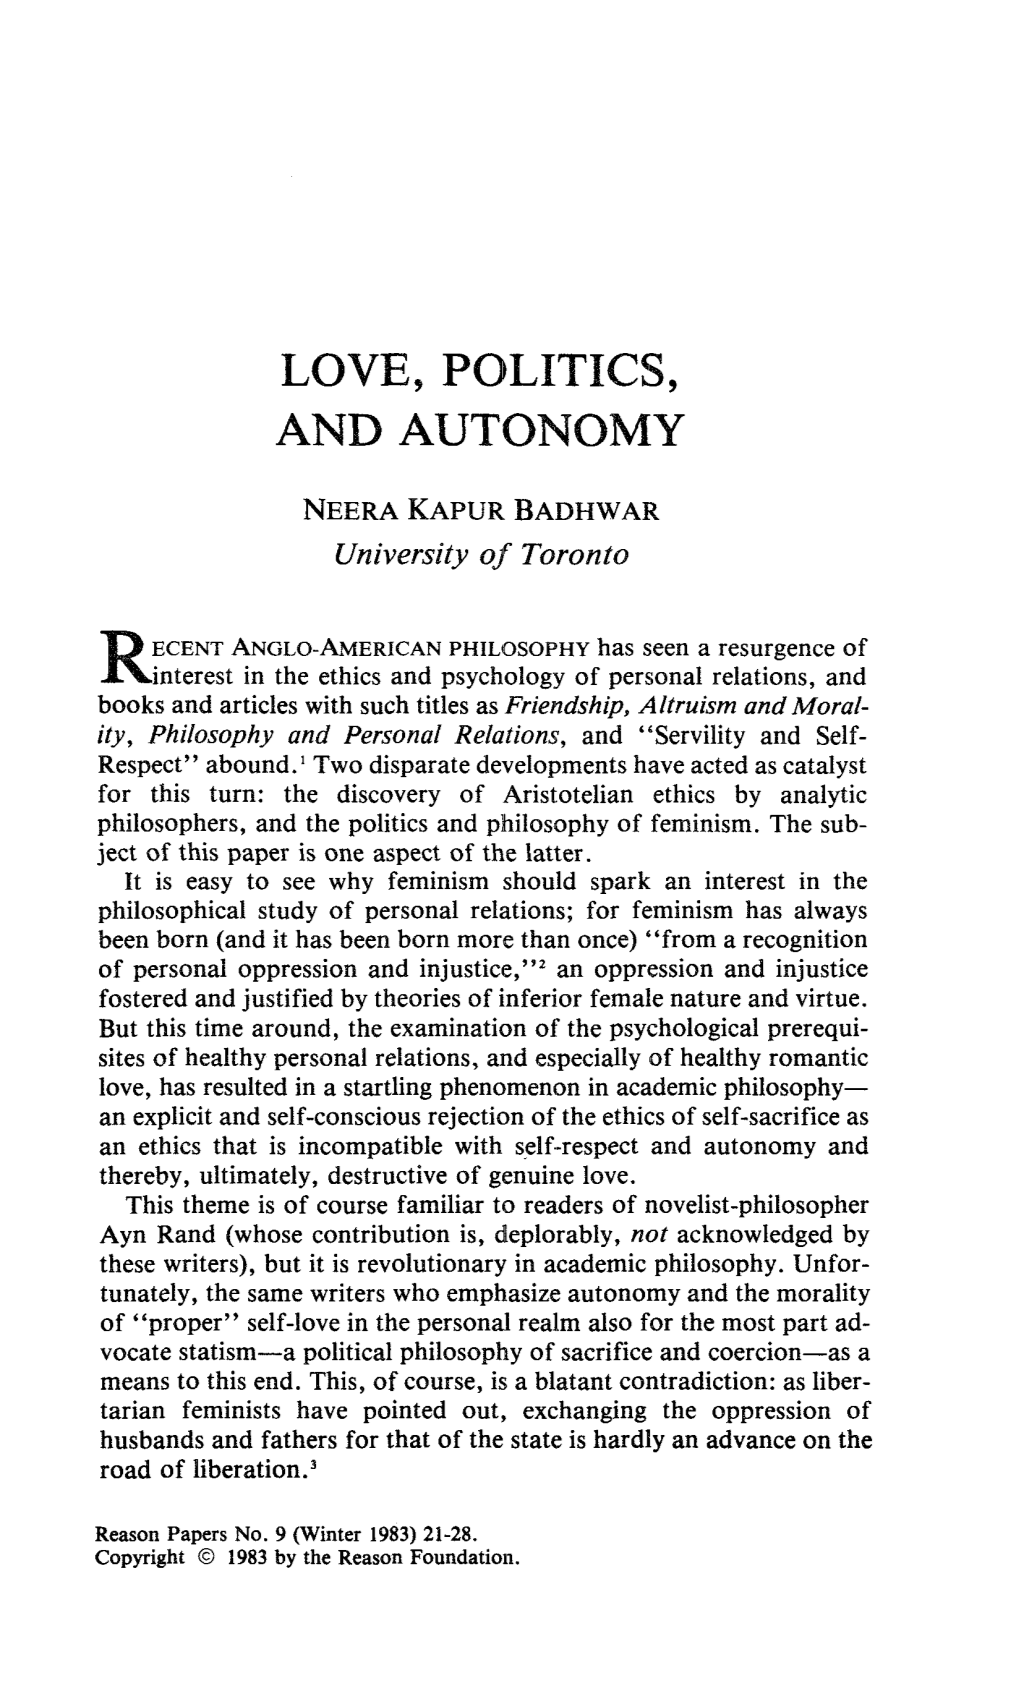 Love, Politics, and Autonomy